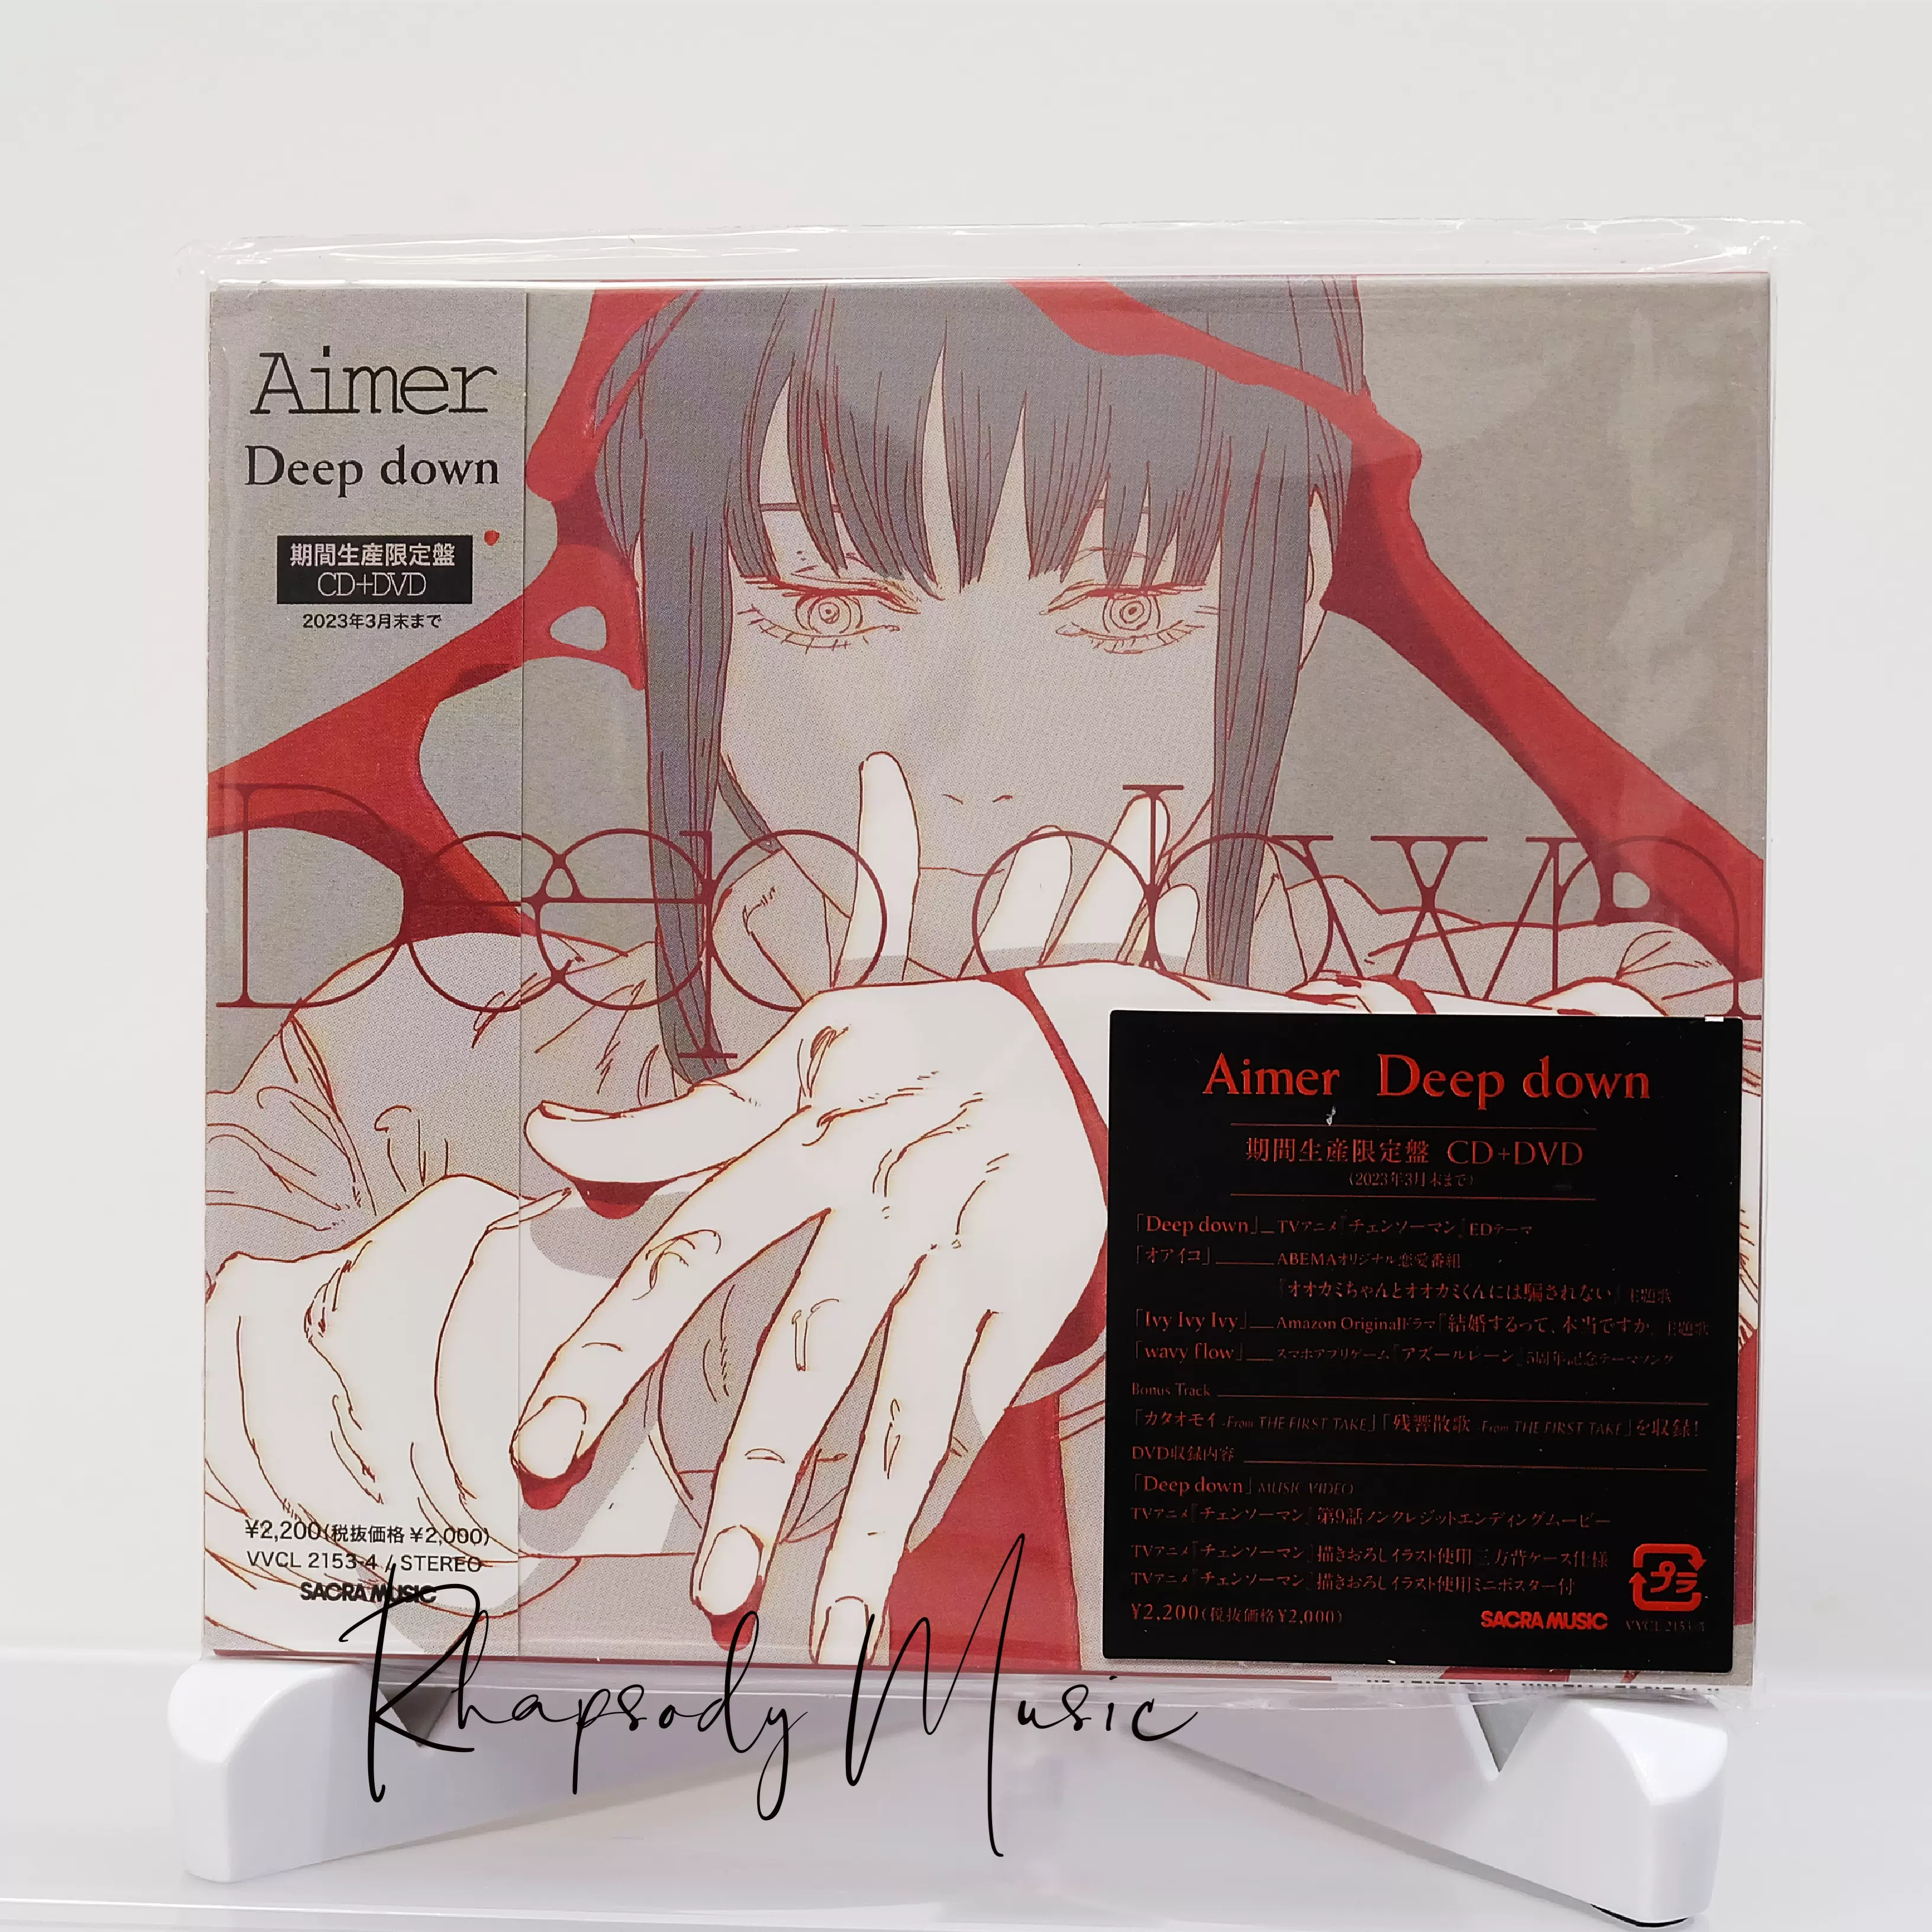 Aimer Deep down 期间生产限定盘CD+DVD 特典可选-Taobao